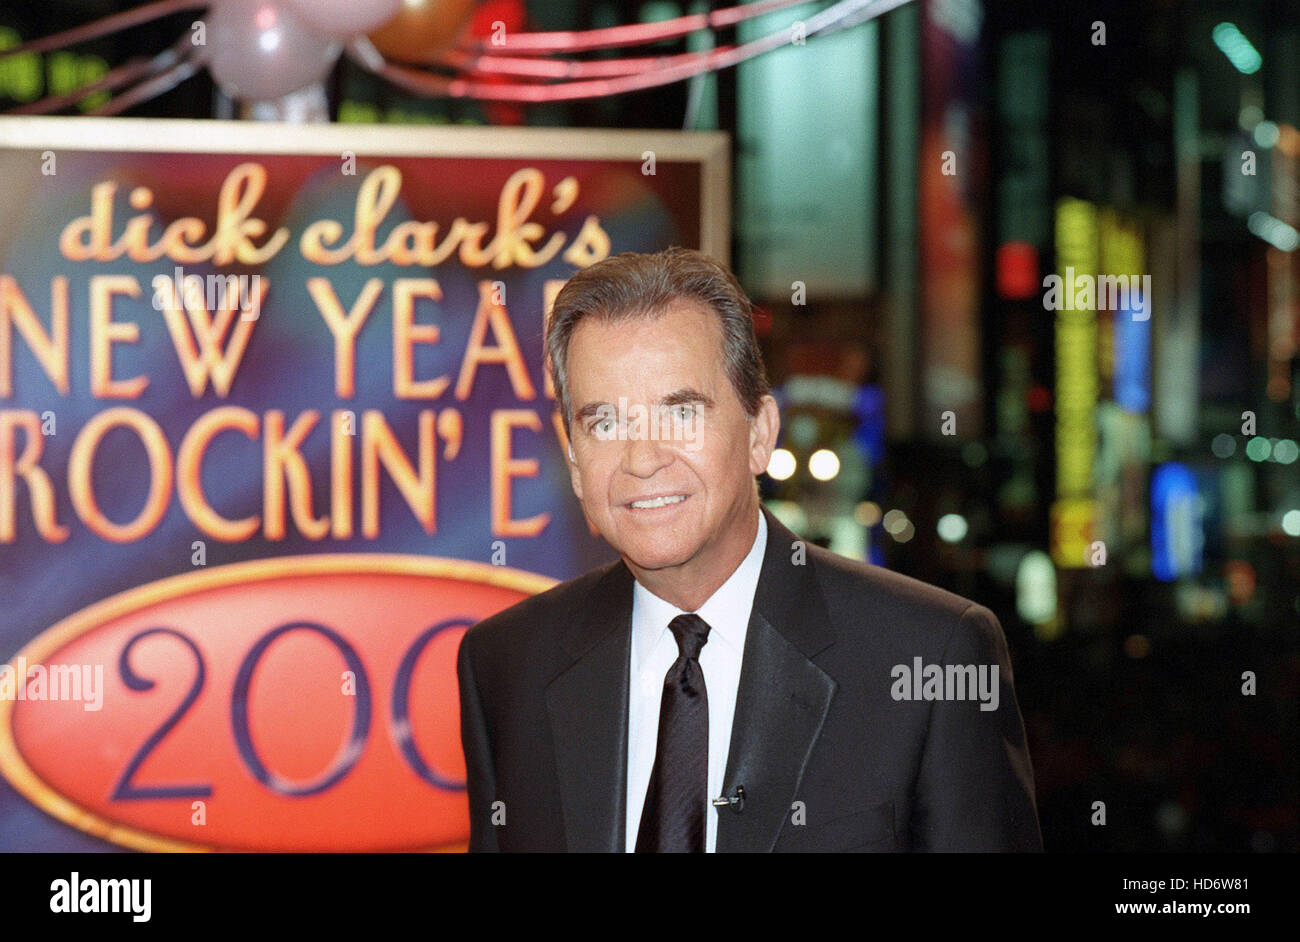 DICK CLARK'S NEW YEAR'S ROCKIN' EVE 2003, Dick Clark, 2002 Stock Photo -  Alamy